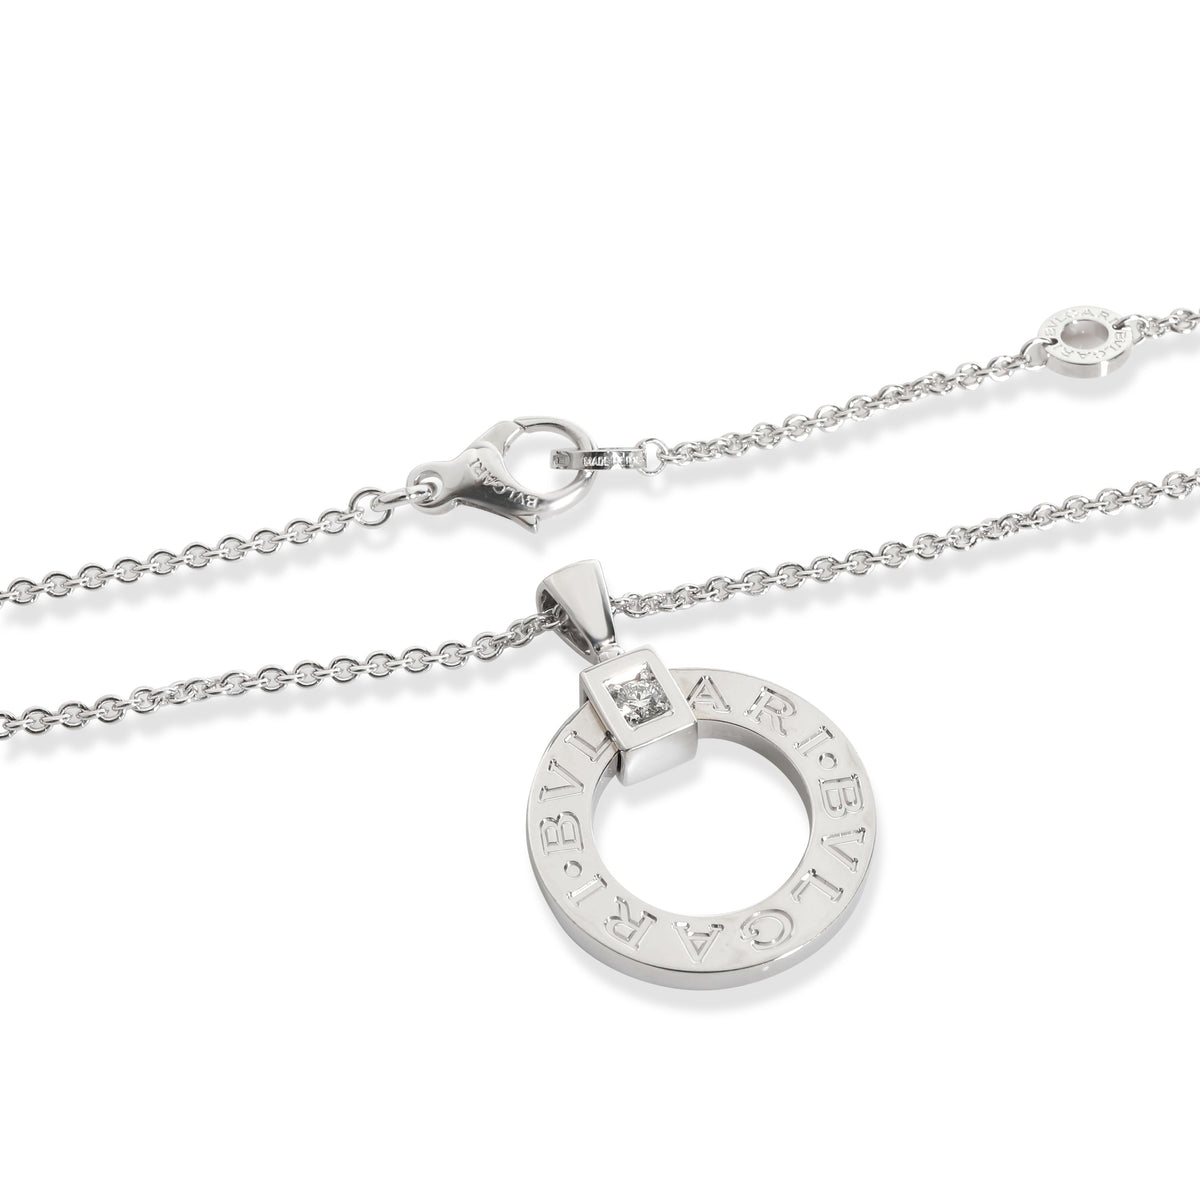 Bulgari Bulgari Open Circle Diamond Necklace in 18K White Gold 0.08 CTW